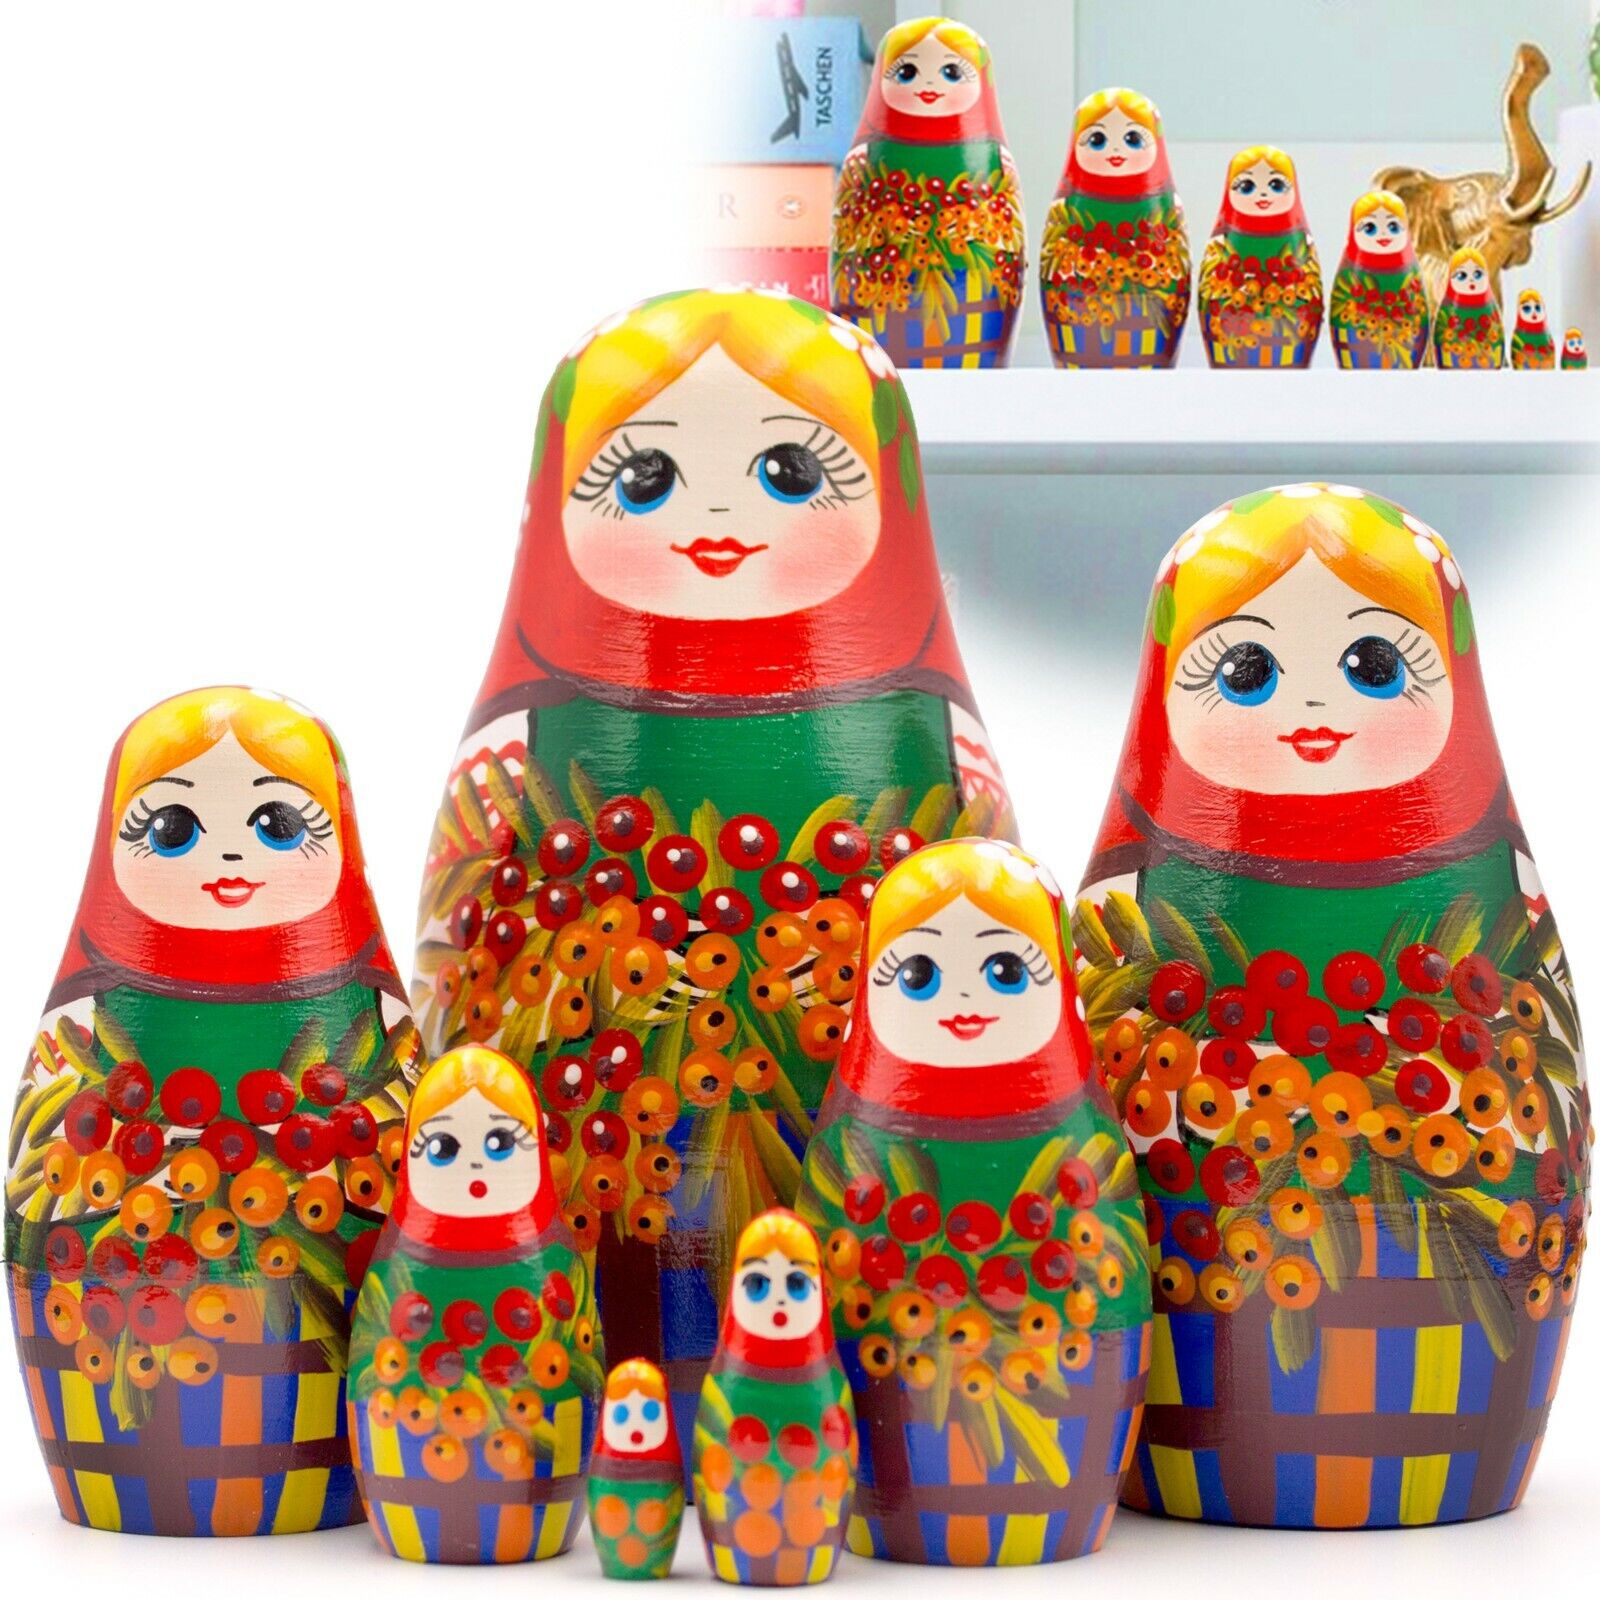 Matryoshka Dolls Set of 7 pcs - Russian Doll in Sarafan Dress with Rowan Branch